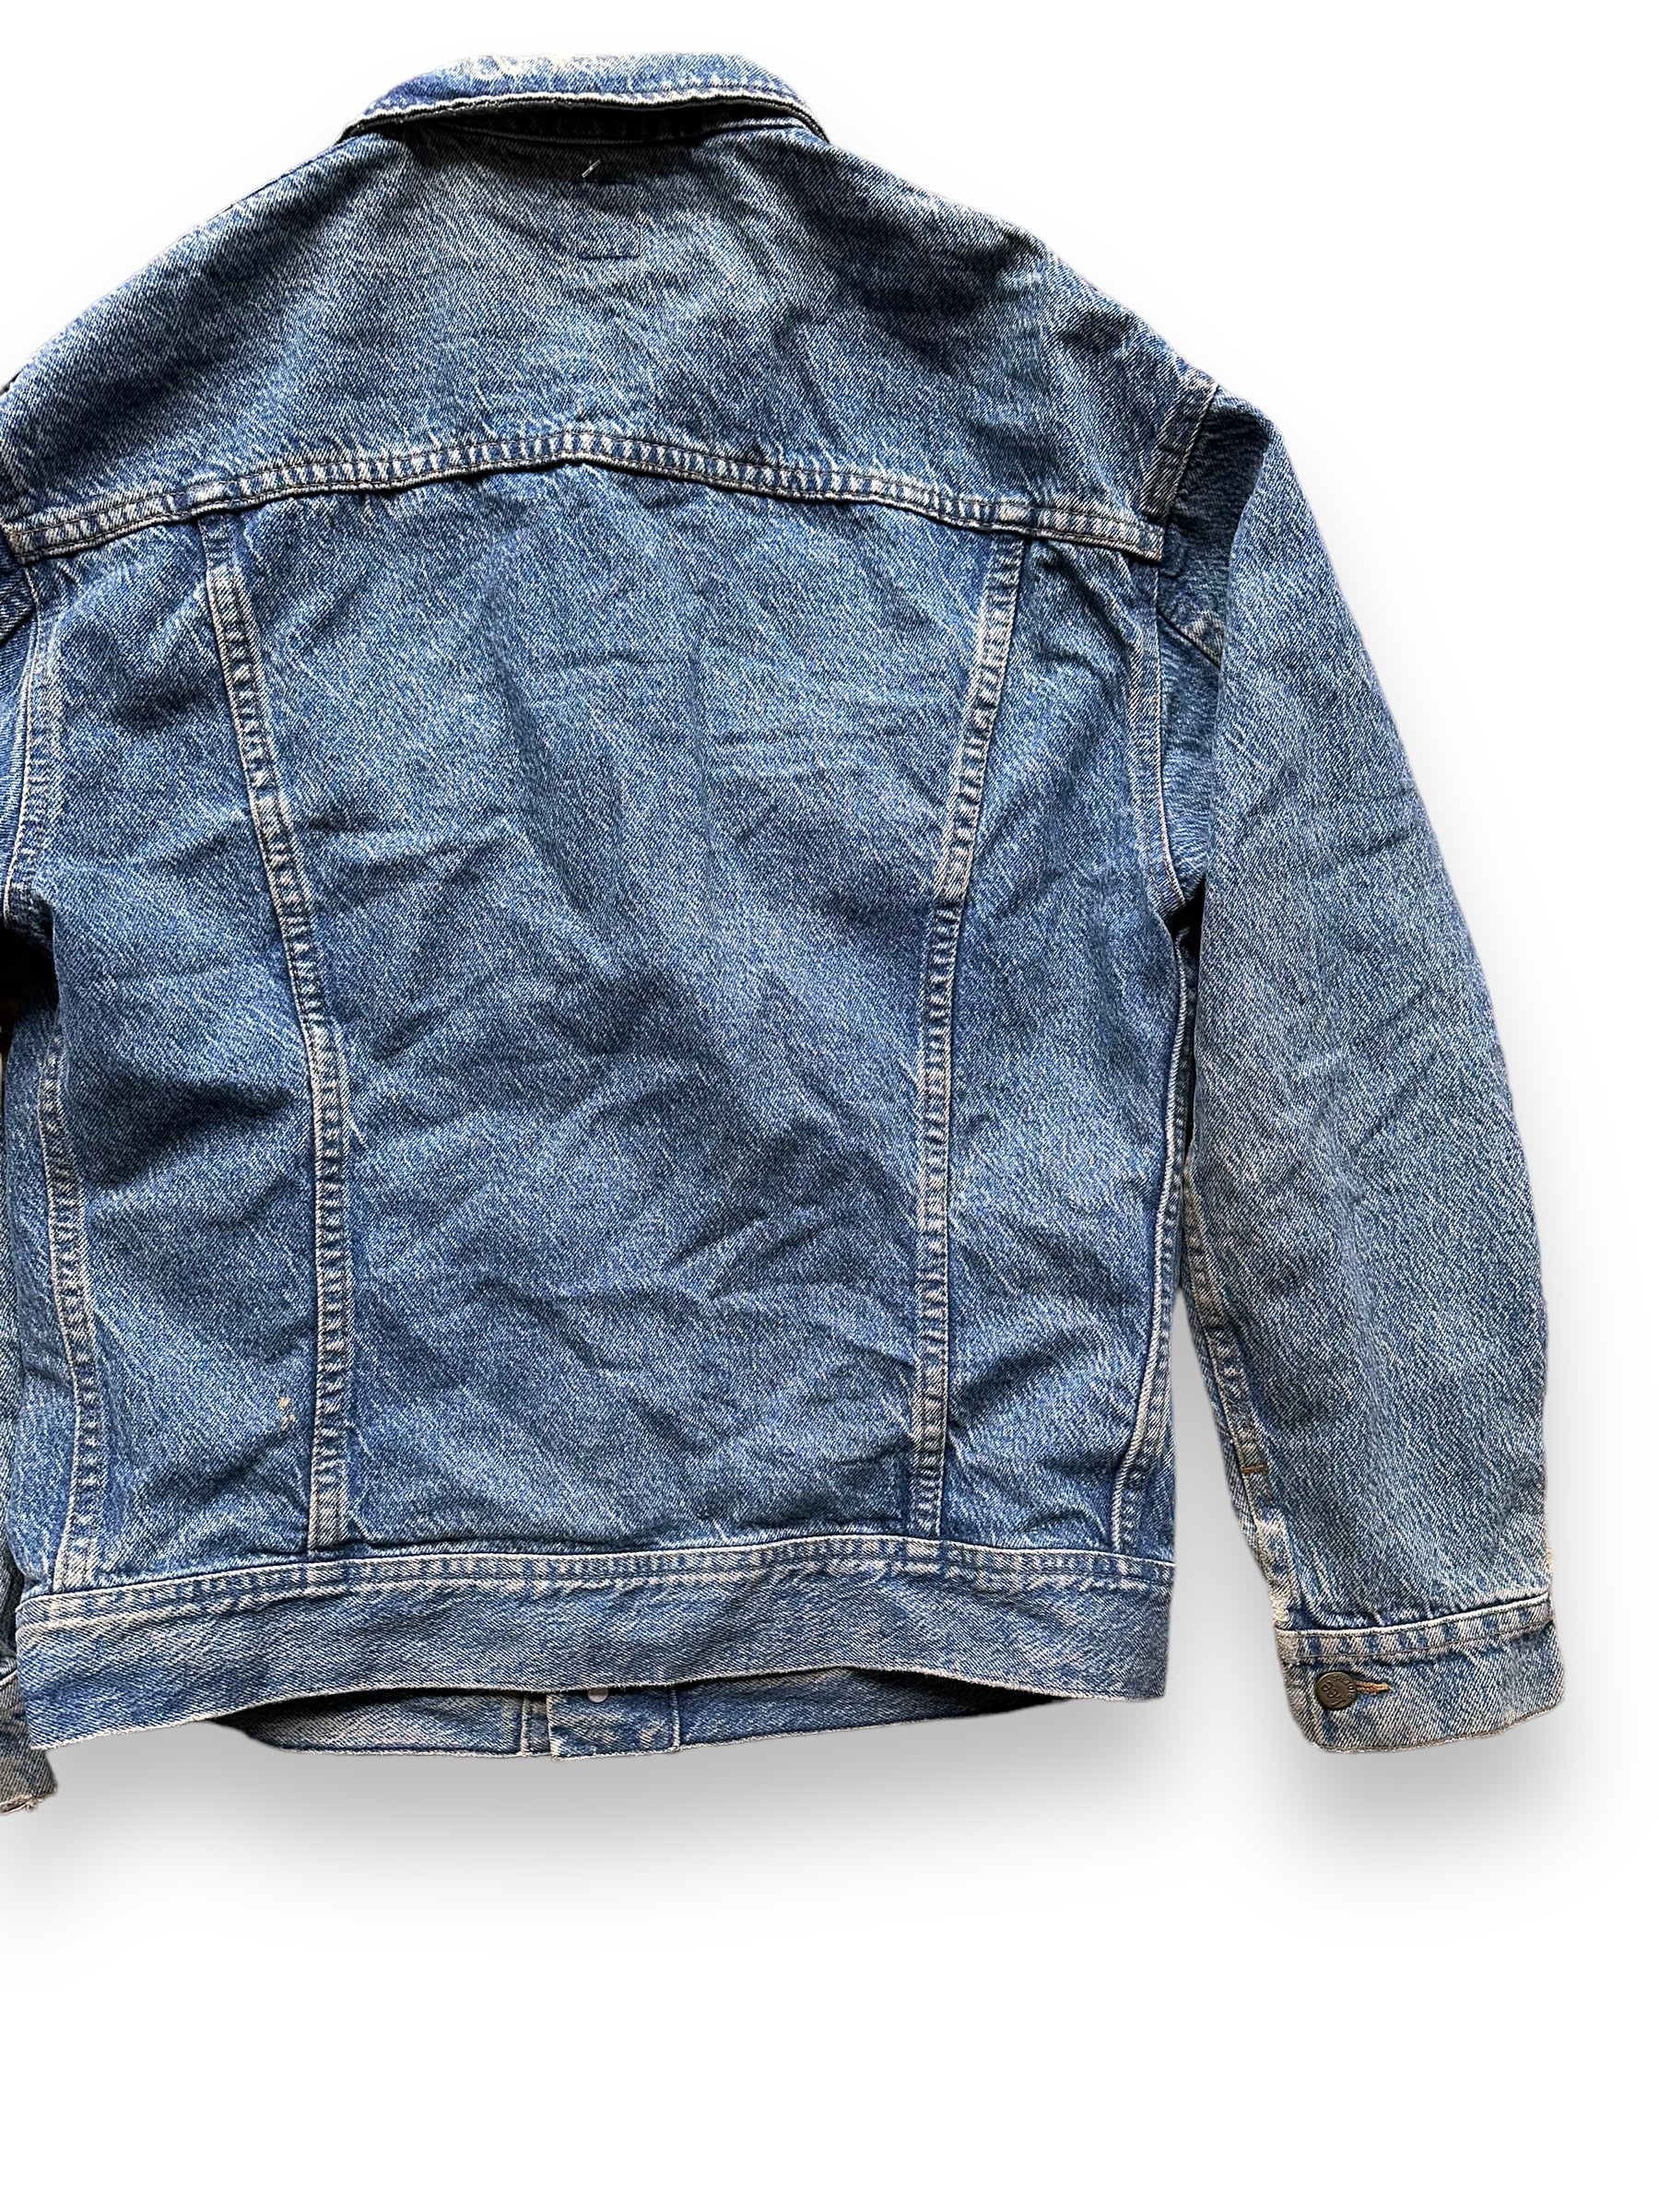 Right Rear View of Vintage Lee 101-J Denim Jacket SZ XL | Vintage Denim Workwear Seattle | Seattle Vintage Denim